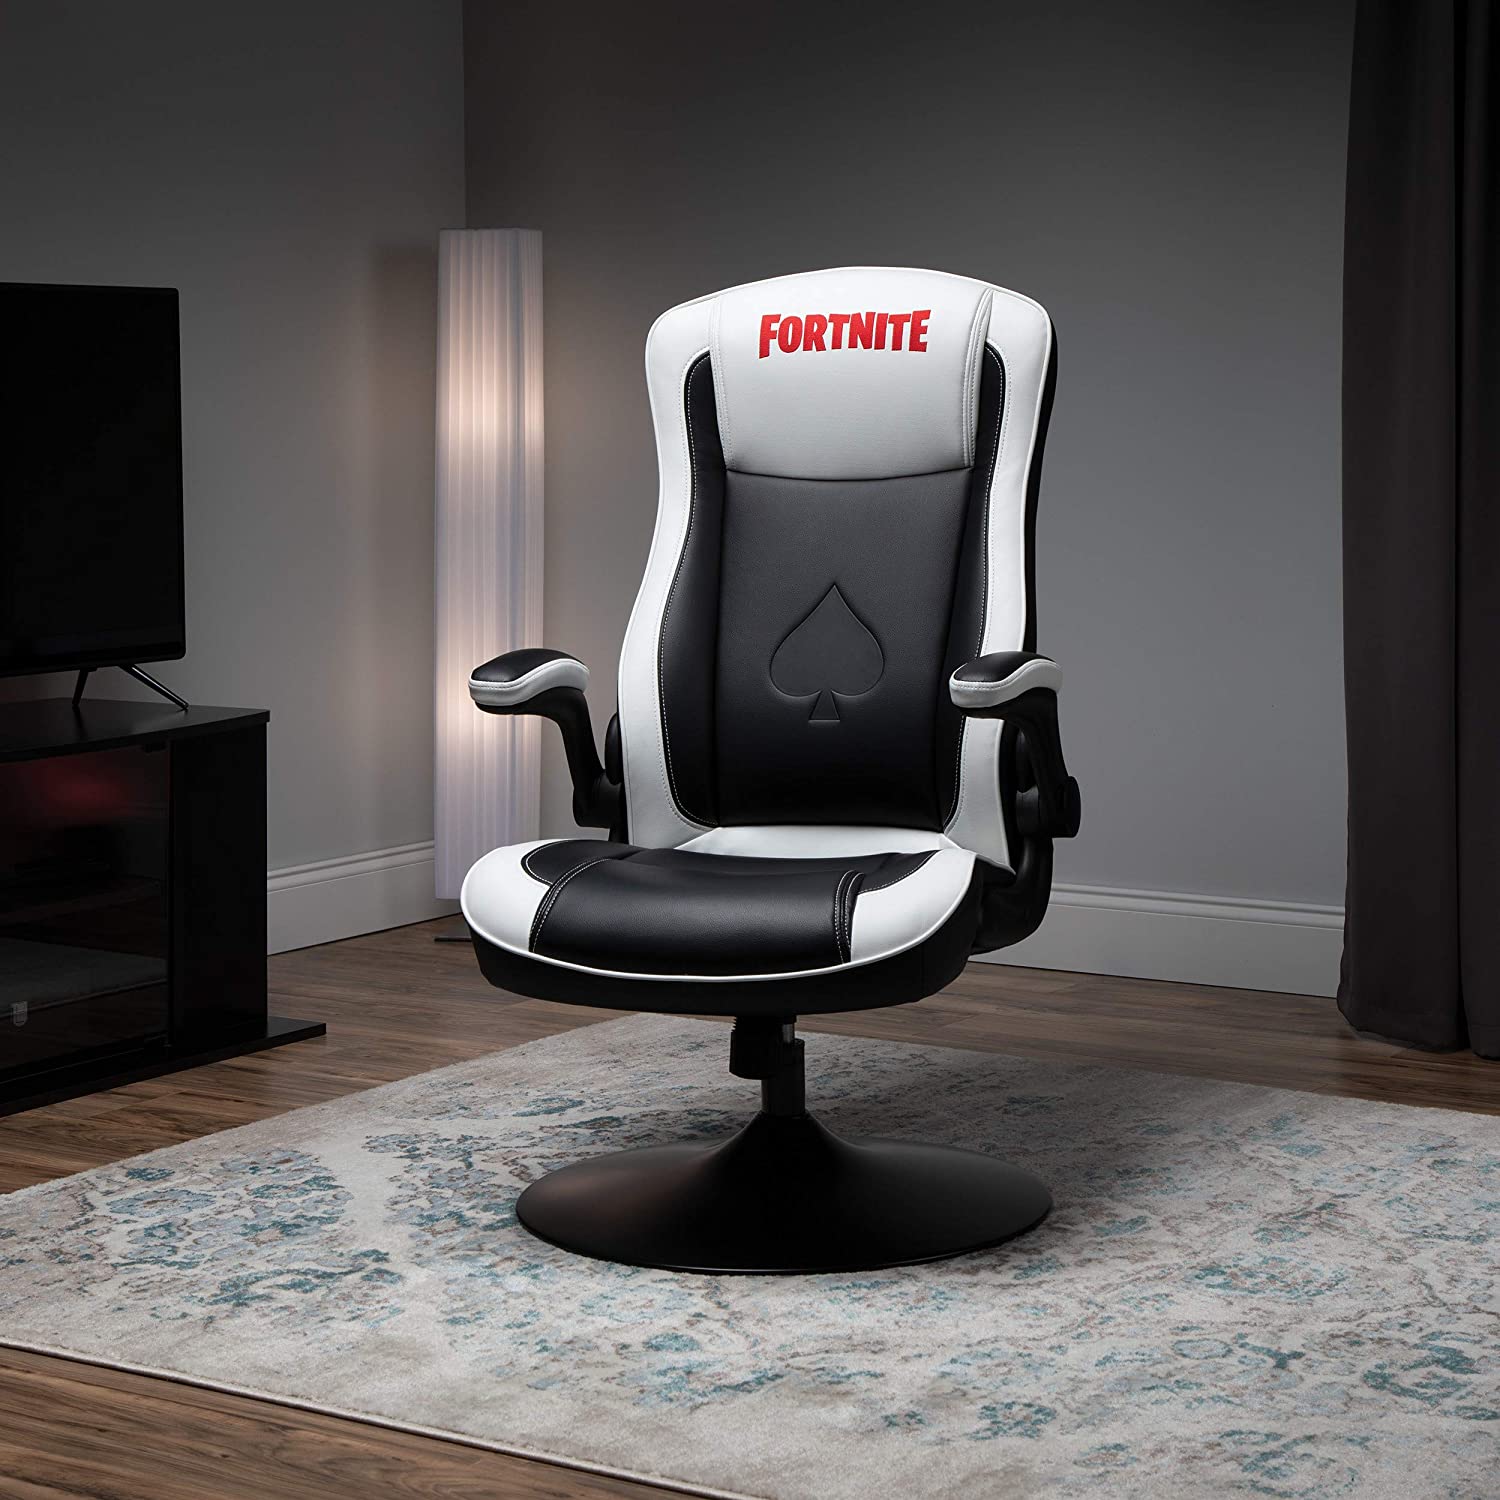 Respawn Fortnite Racing Style Rocker Rocking Gaming Chair 87 Raven Xi Fortnite Gaming Reclining Ergonomic Chair